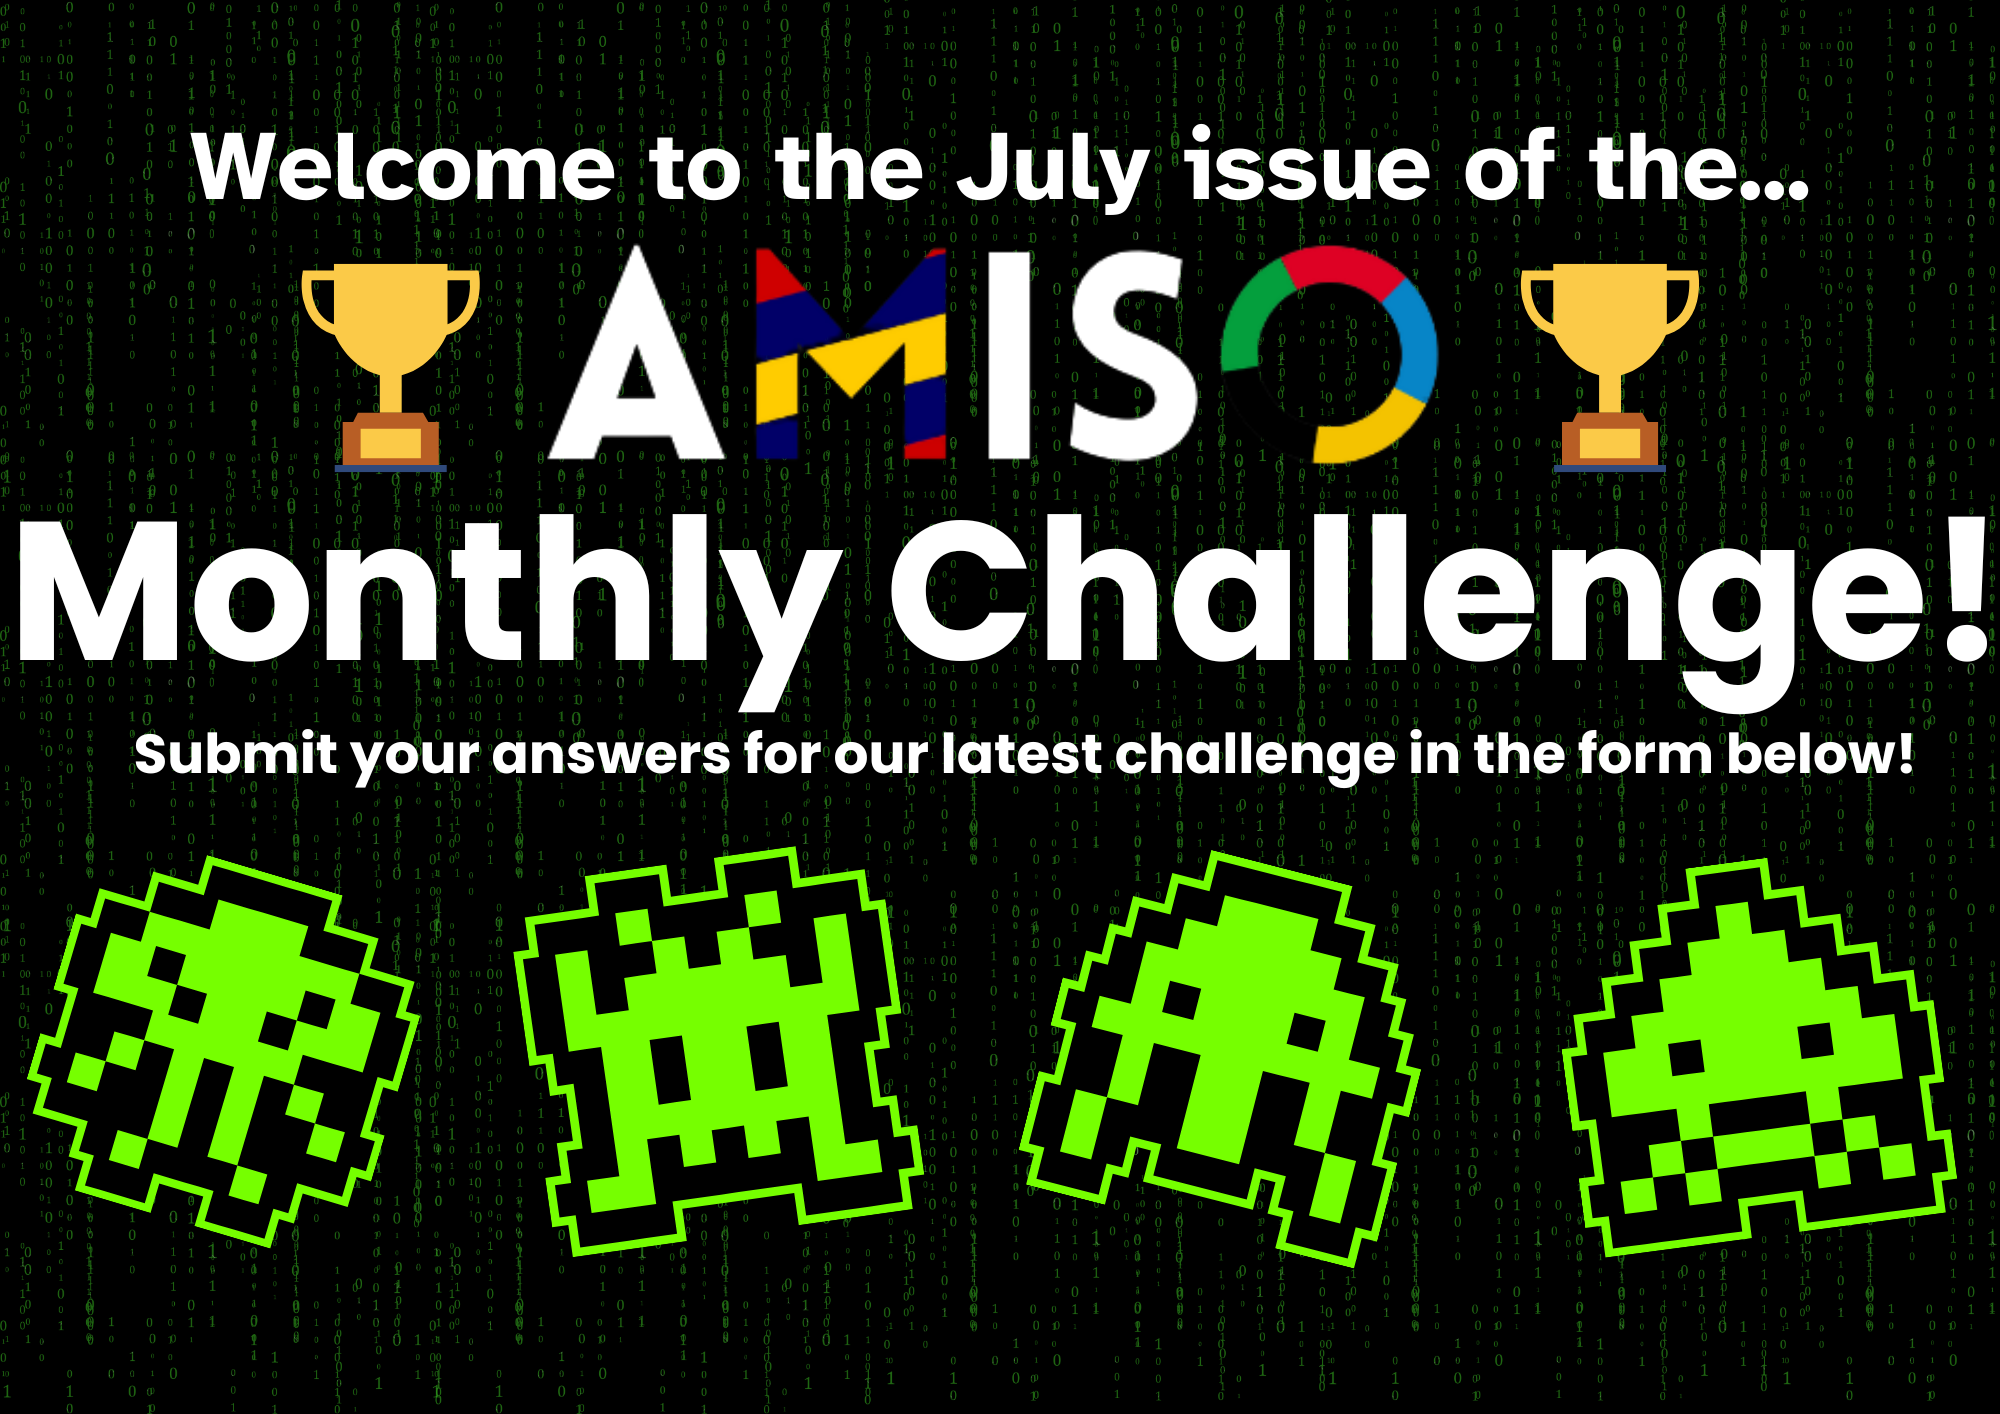 AMISO Monthly Challenge Website Banner